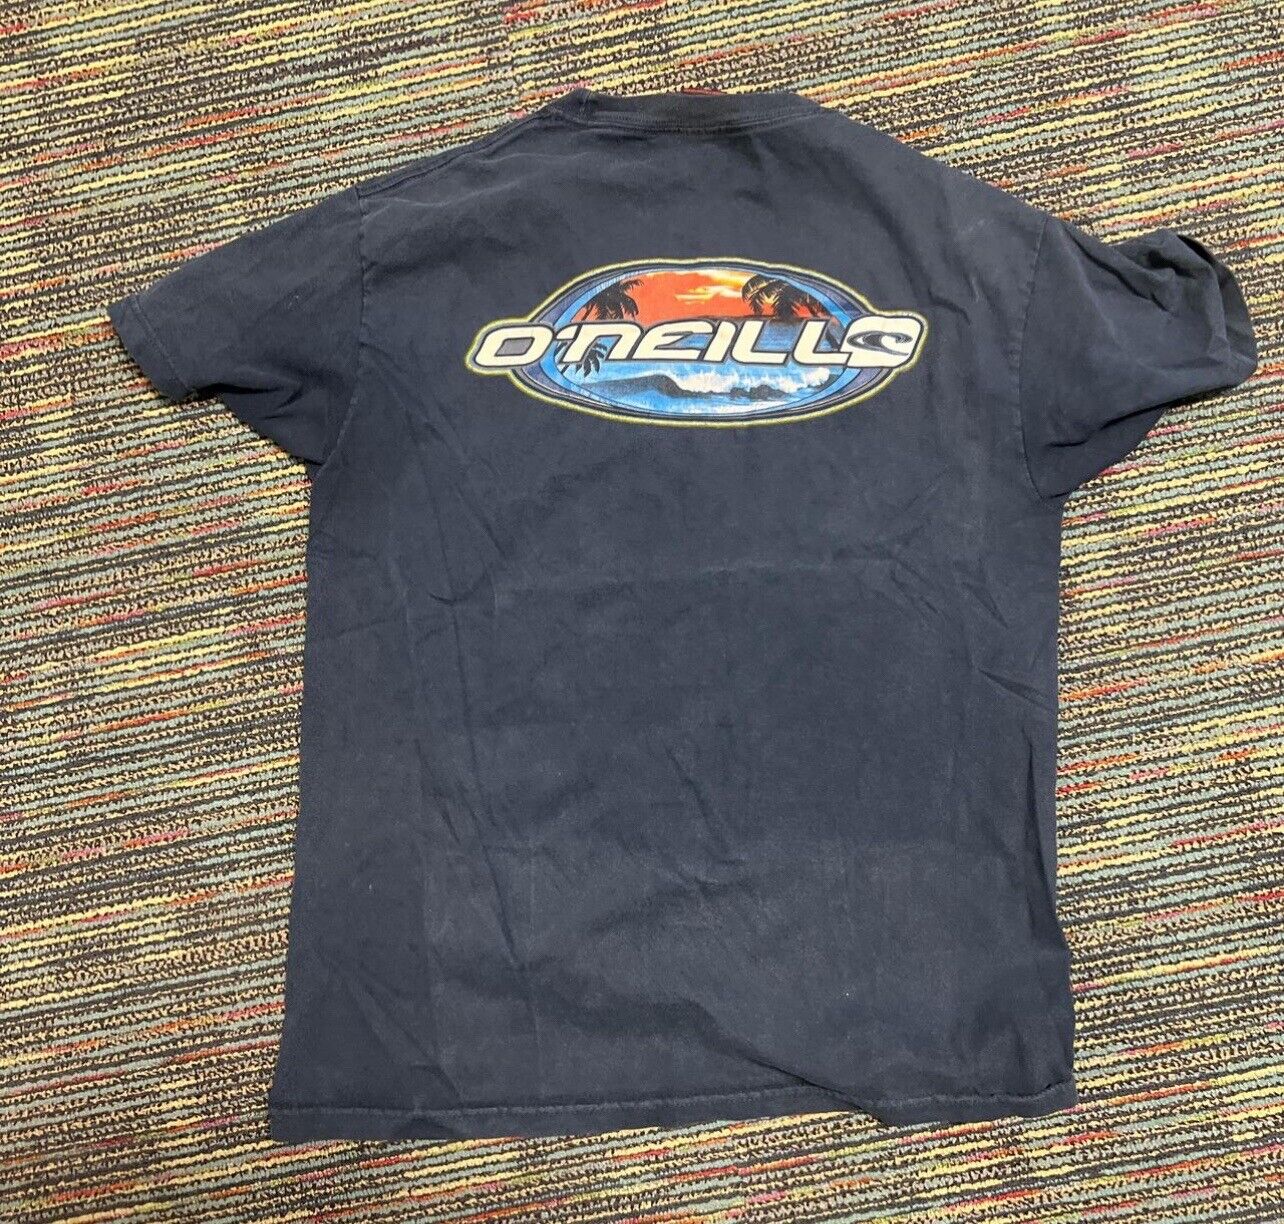 O’neill late 90s shirt - image 1